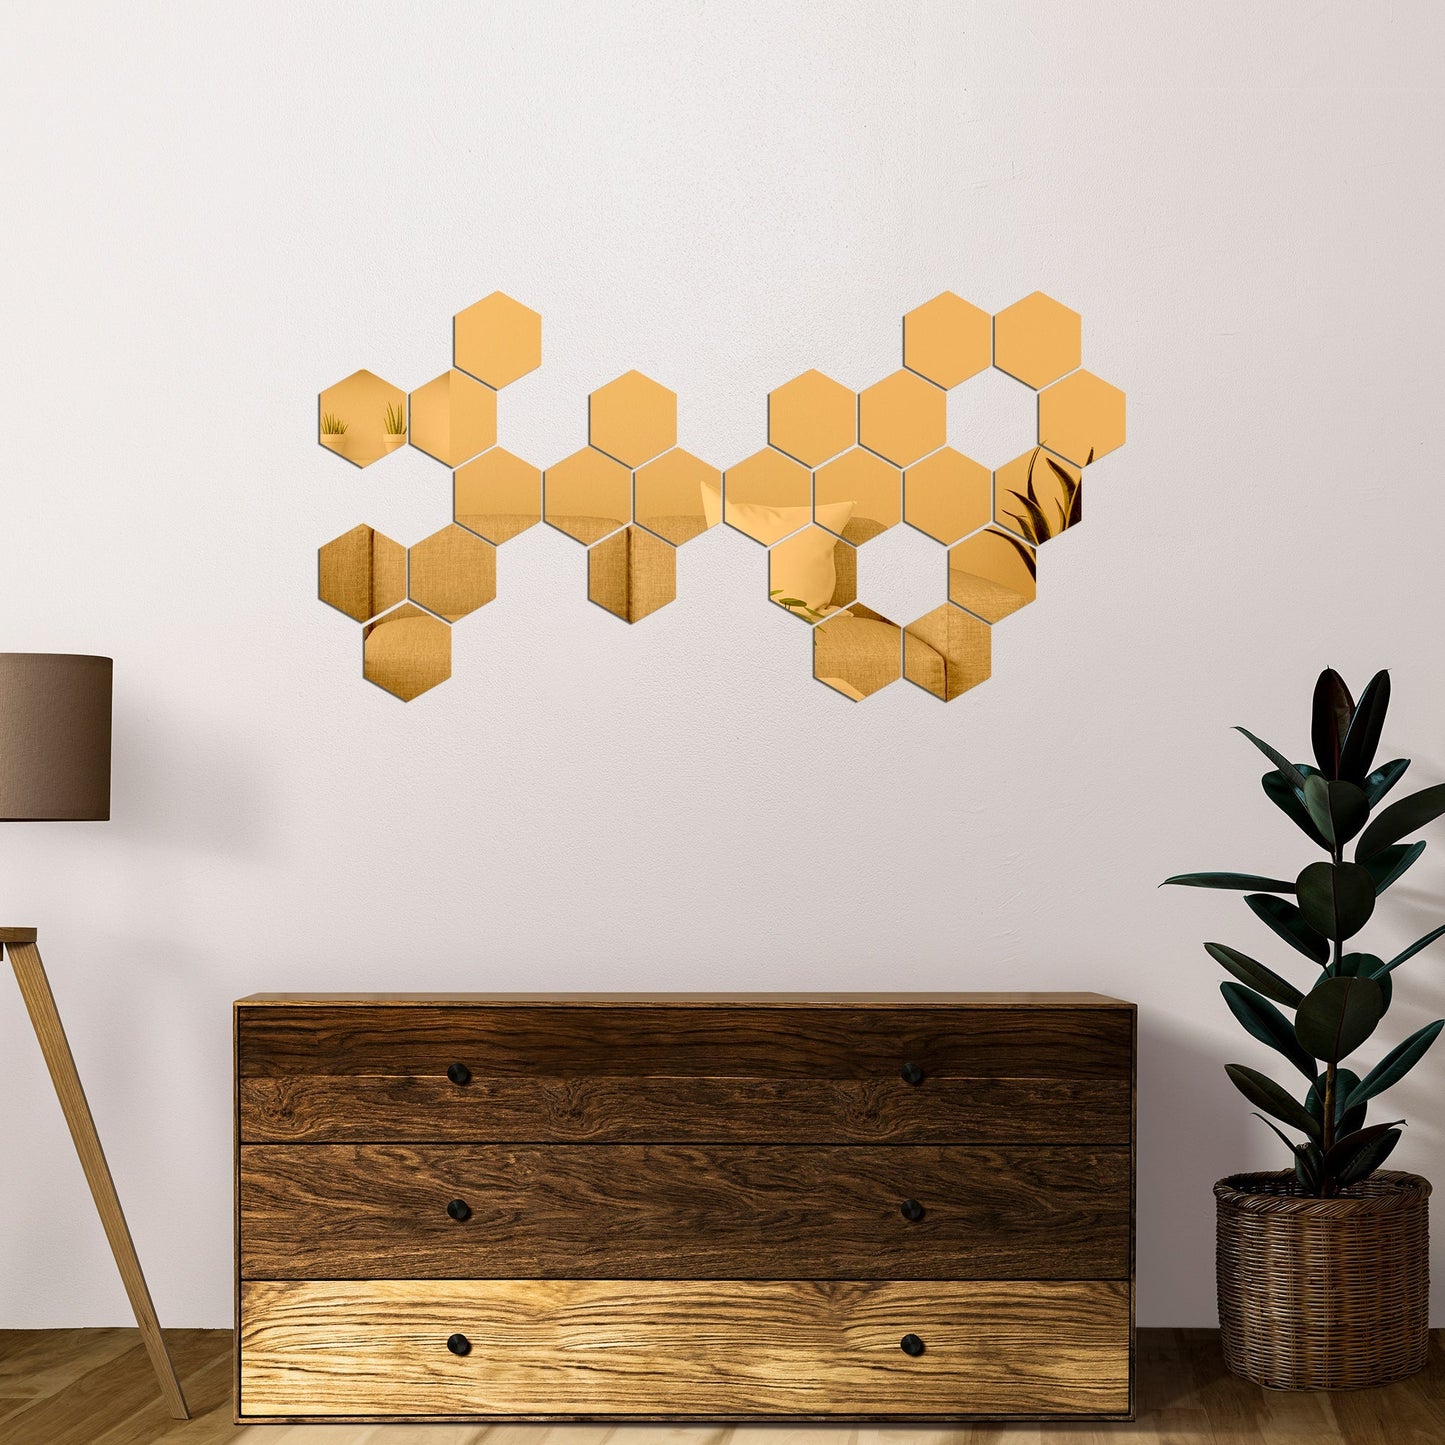 Acrylic Hexagon Mirror Wall Stickers